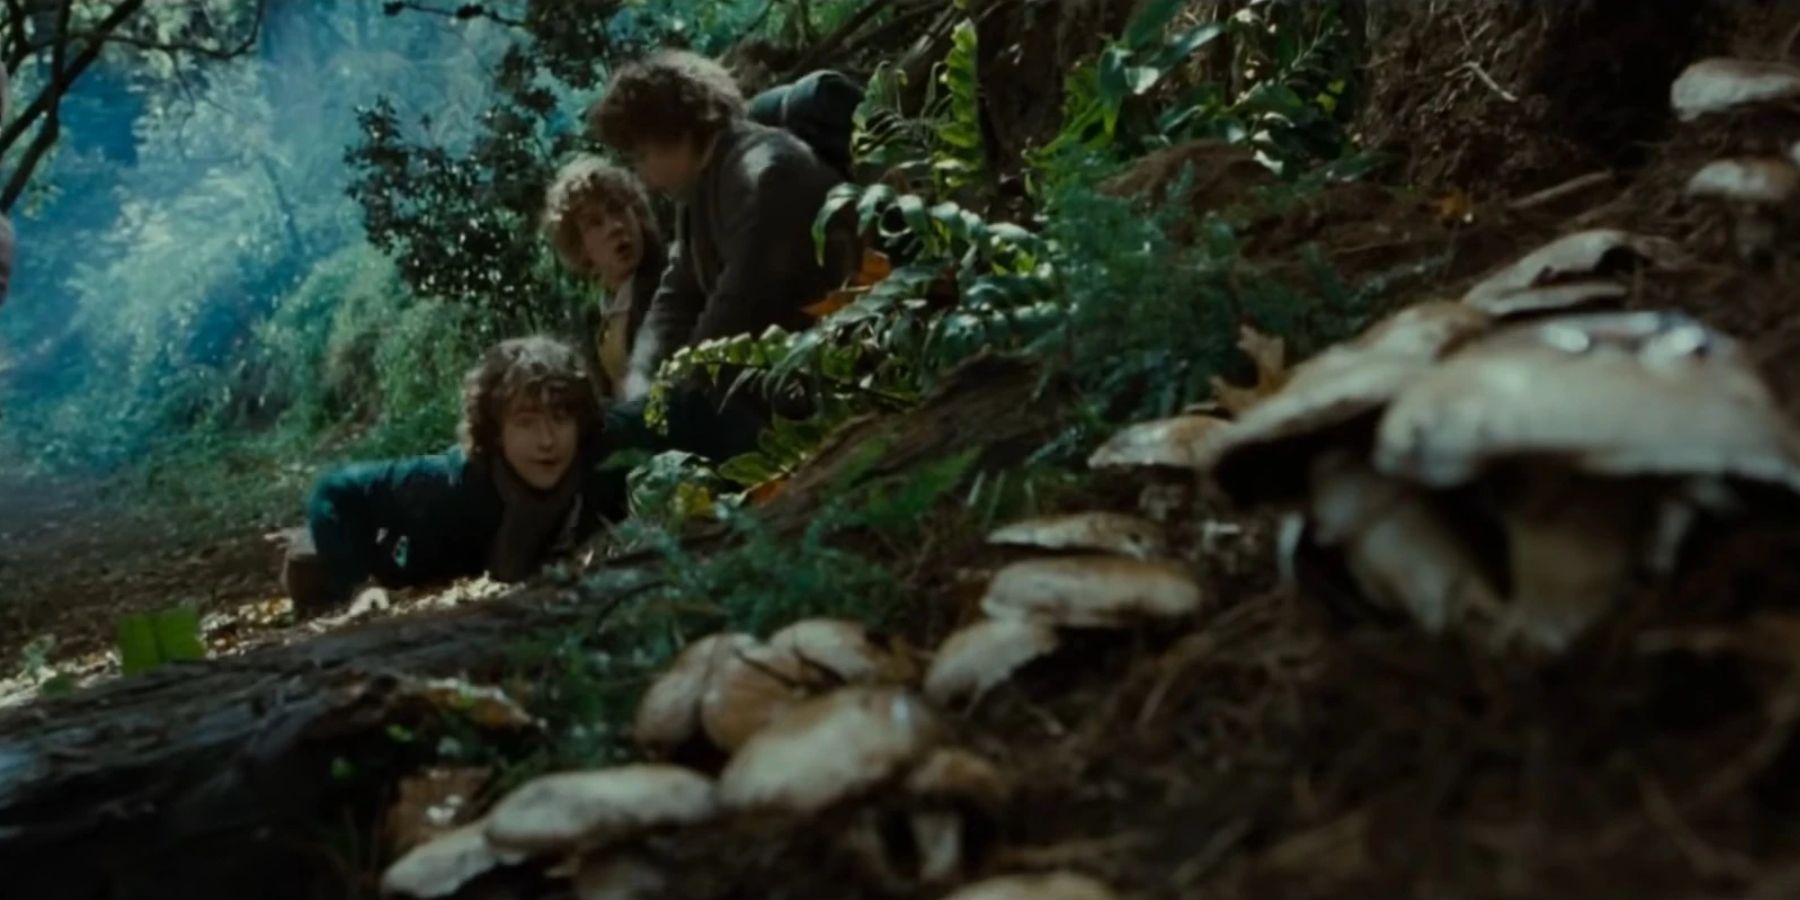 hobbits spot the mushrooms